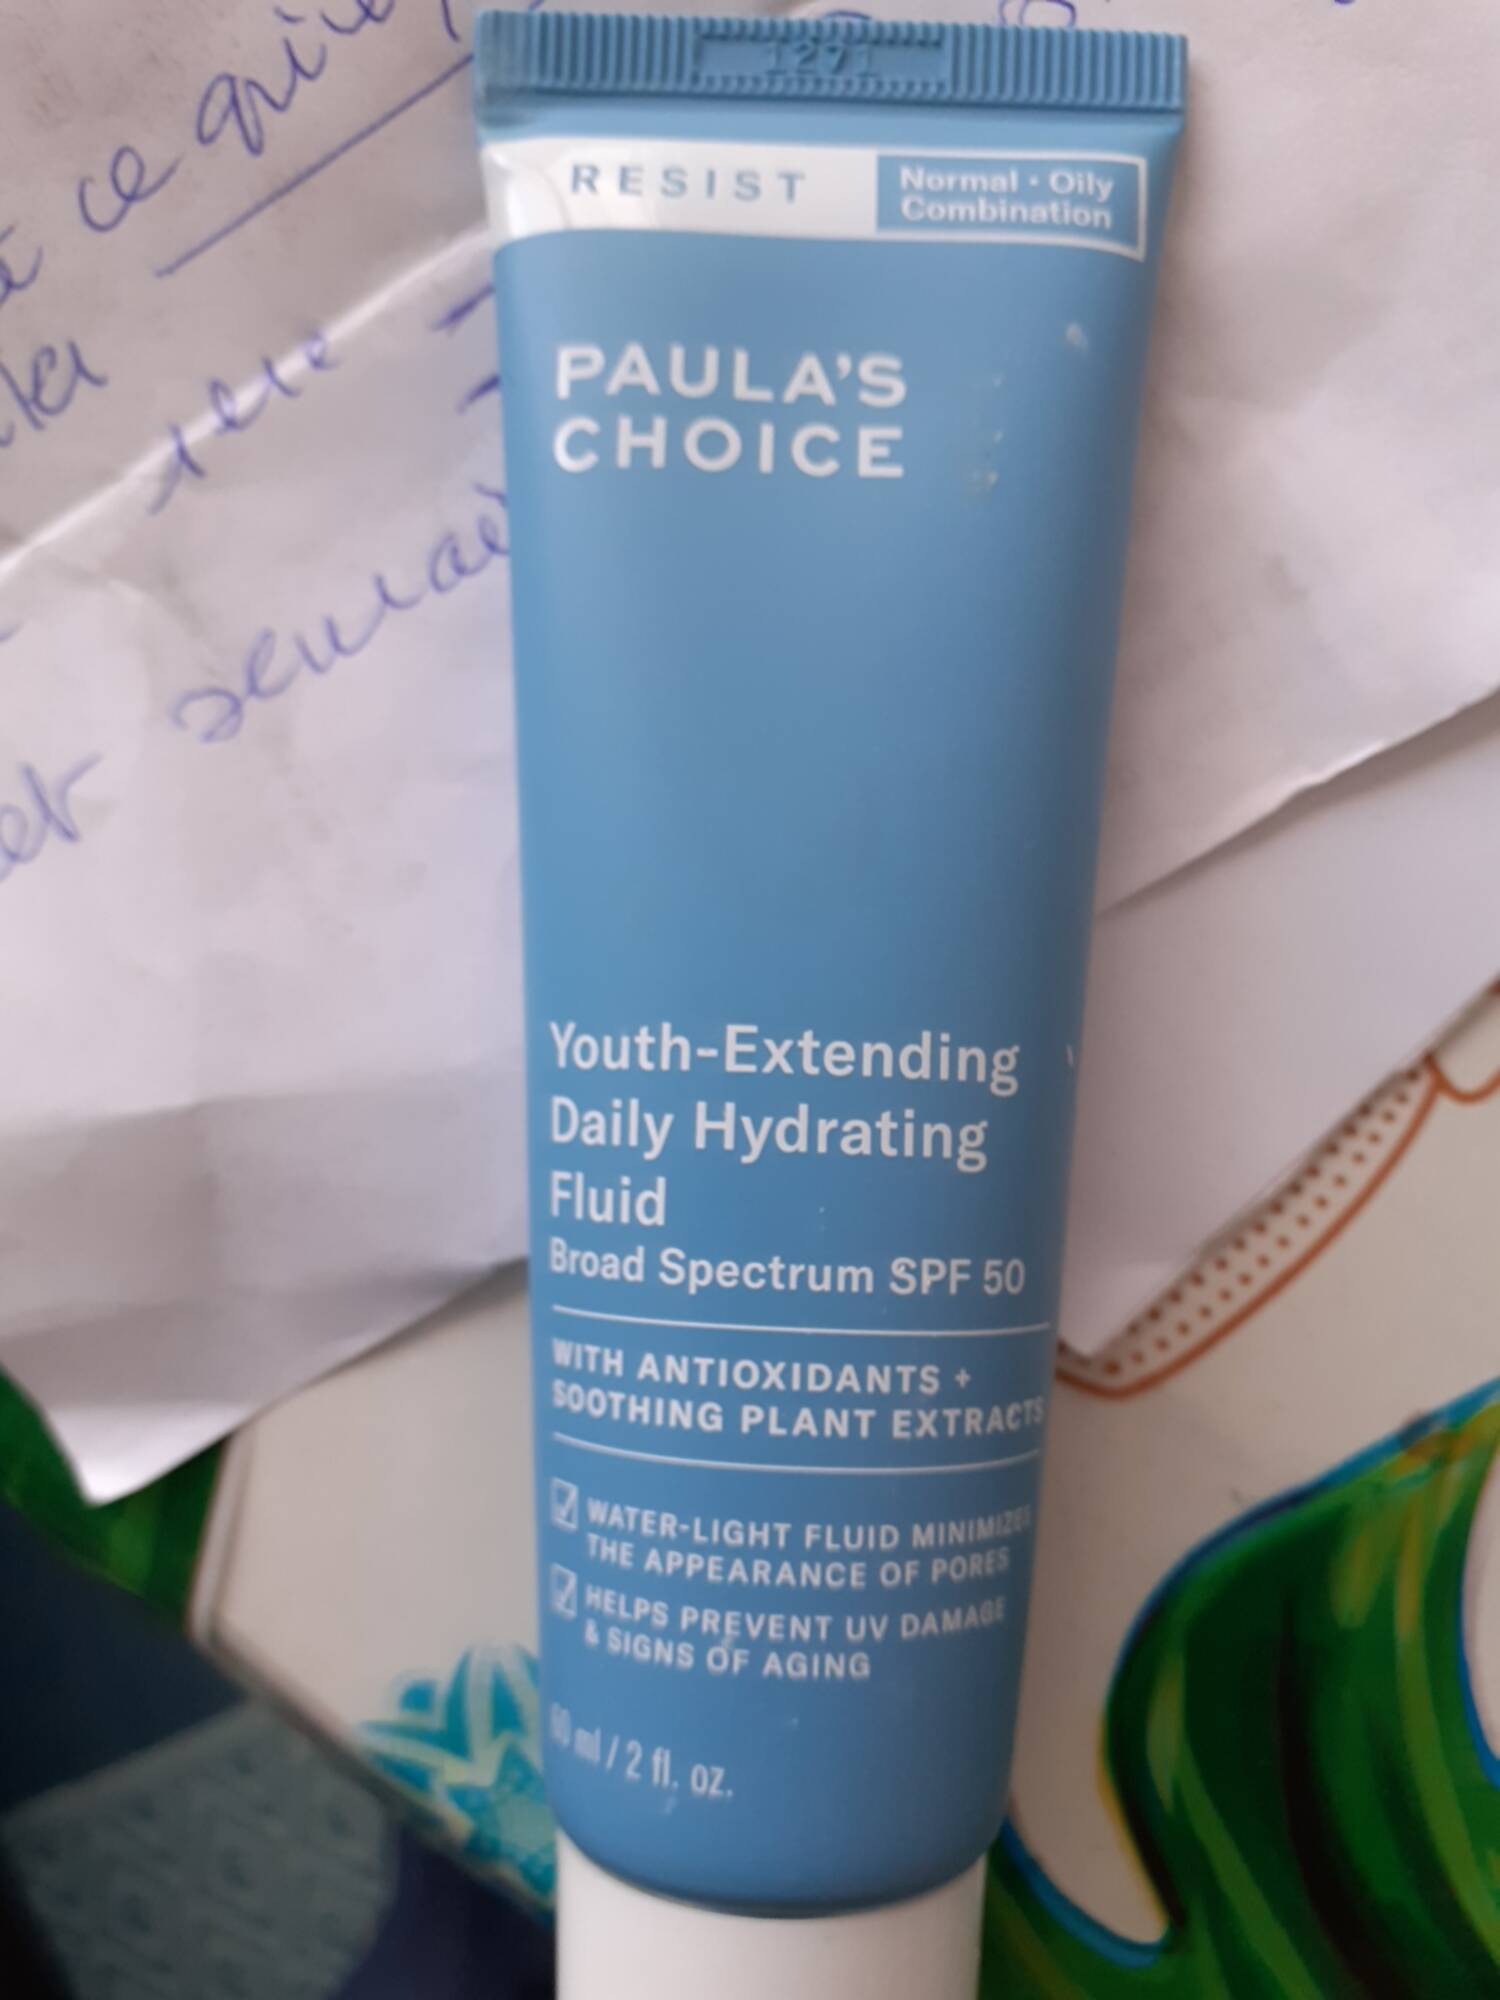 PAULA'S CHOISE - Resist youth-extending daily hydrating fluid